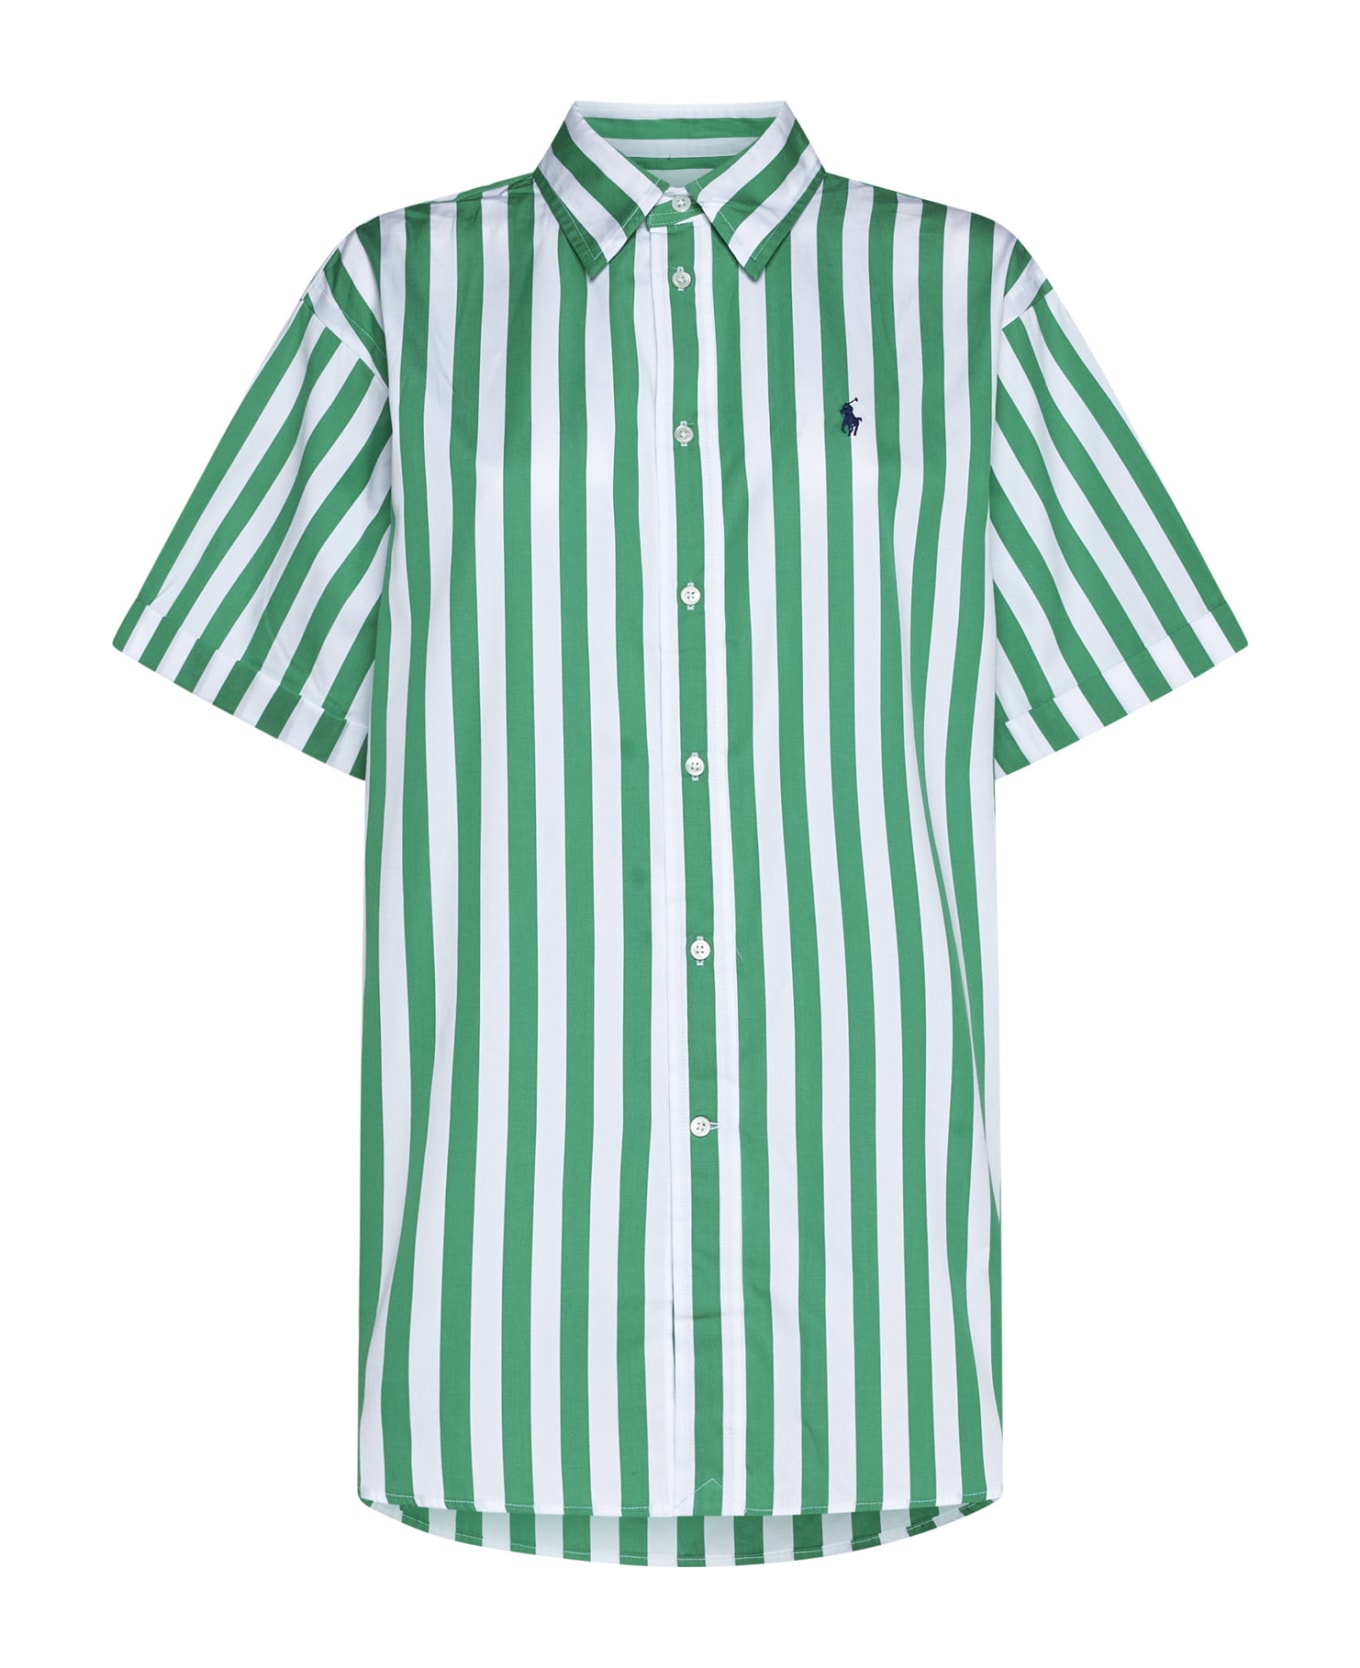 Polo Ralph Lauren Shirt - Green/white